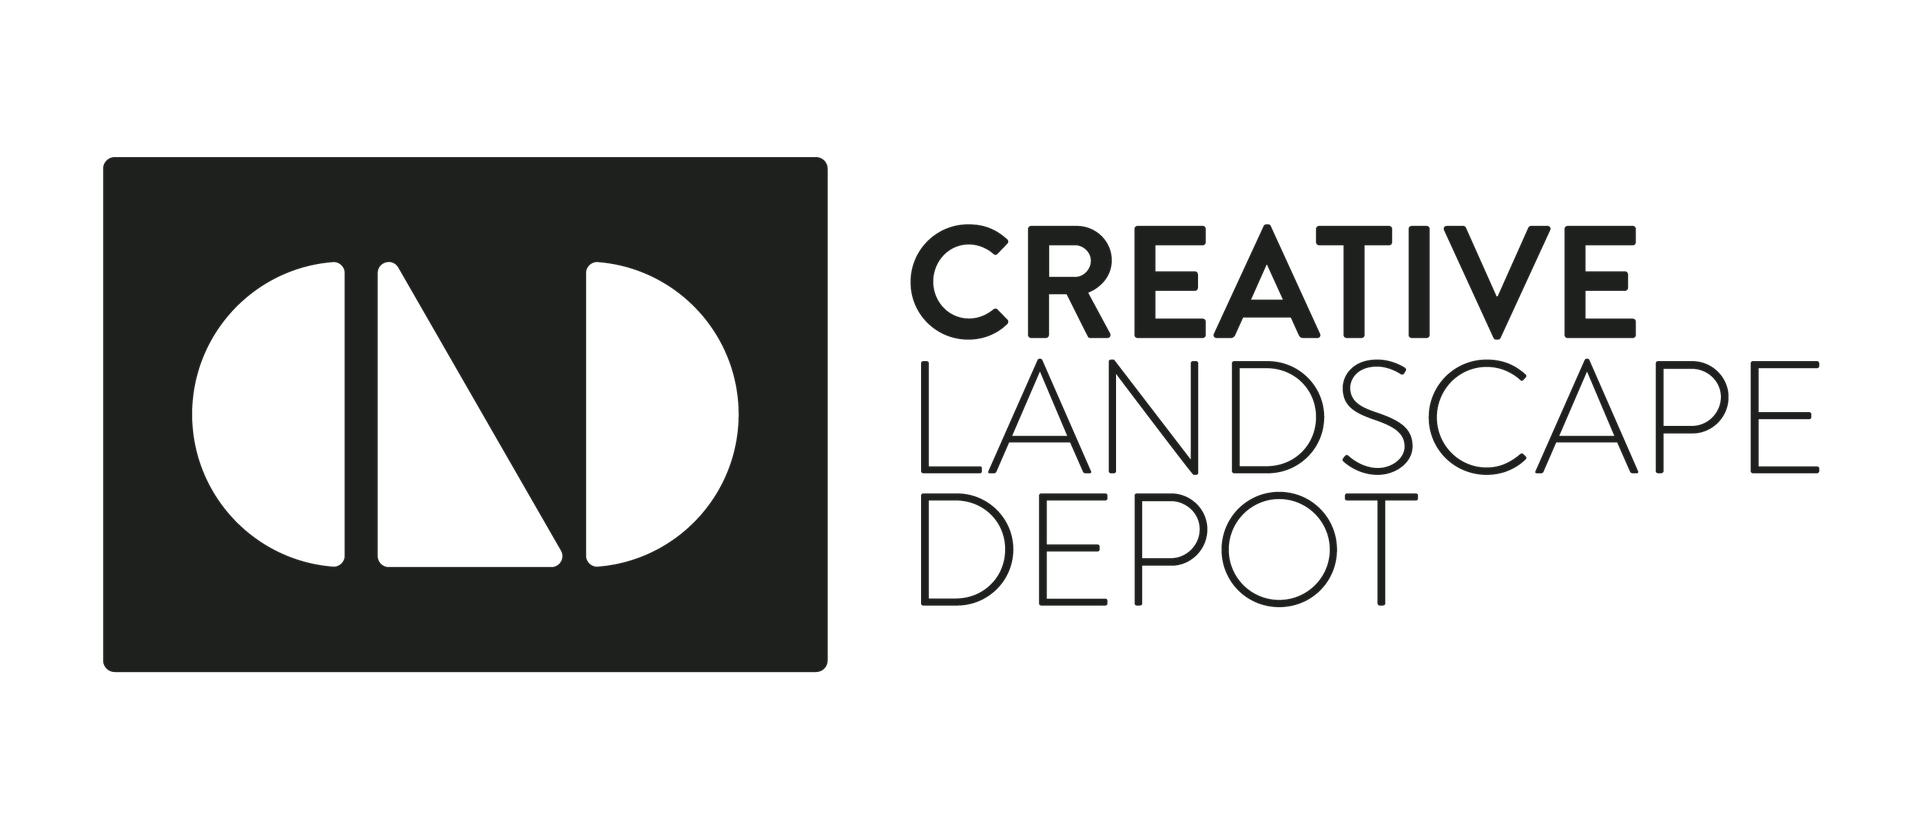 Creative Landscape Depot